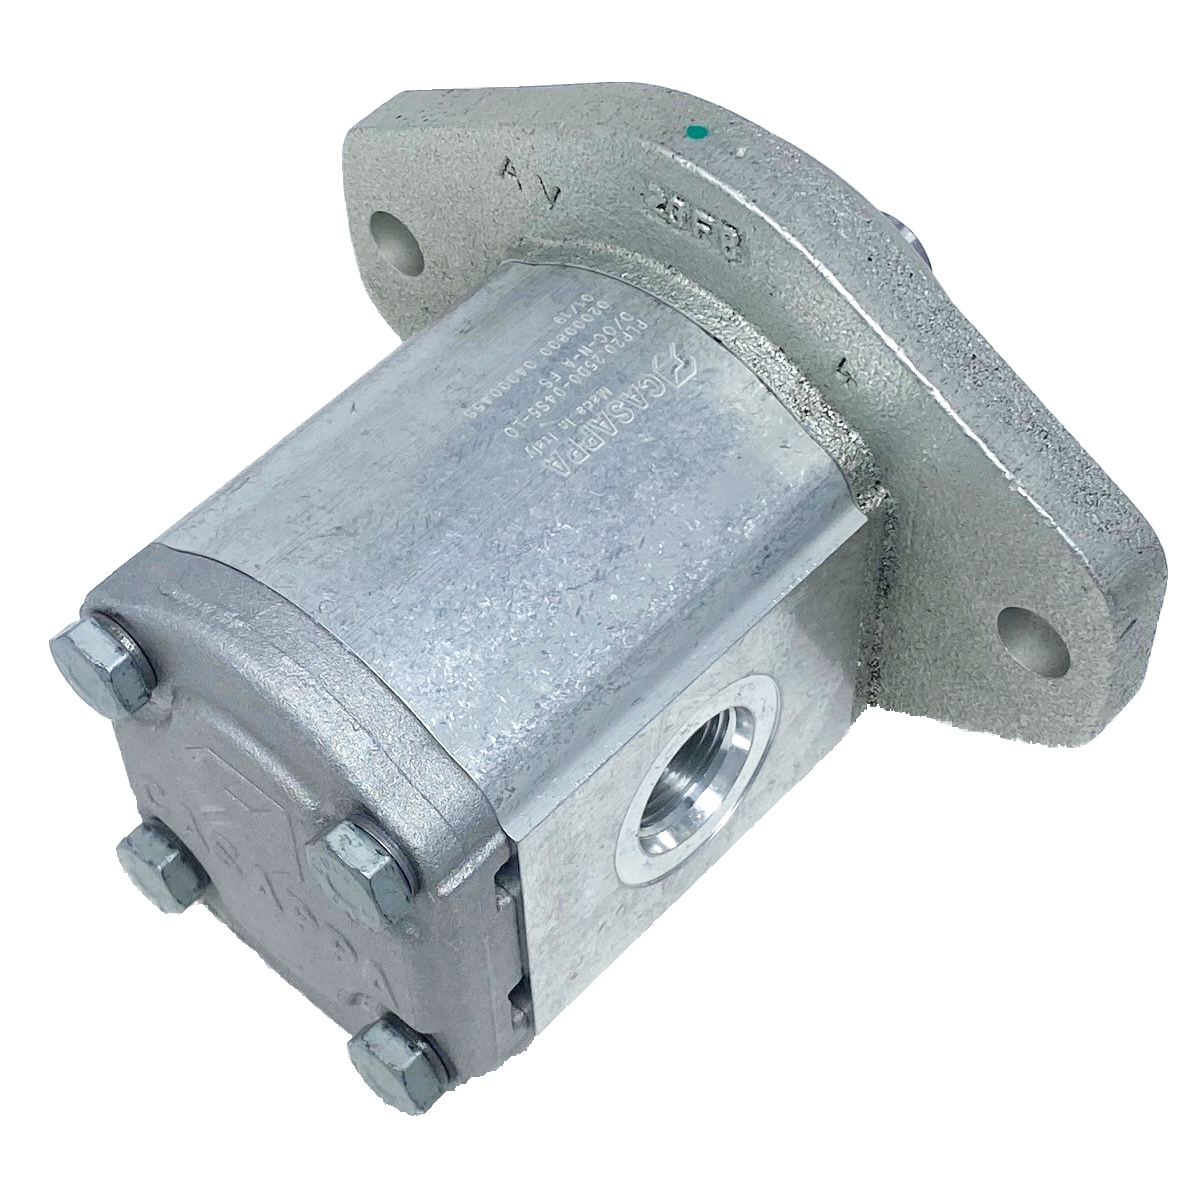 PLM20.20R0-32S5-LOC/OD-N-L : Casappa Polaris Gear Motor, 21.14cc, 2900psi, 3000RPM, Reversible, External Drain, 3/4" Bore x 1/4" Key Shaft, SAE B 2-Bolt Flange, 0.625 (5/8") #10 SAE In, 0.75 (3/4") #12 SAE Out, Aluminum Body, Cast Iron Flange